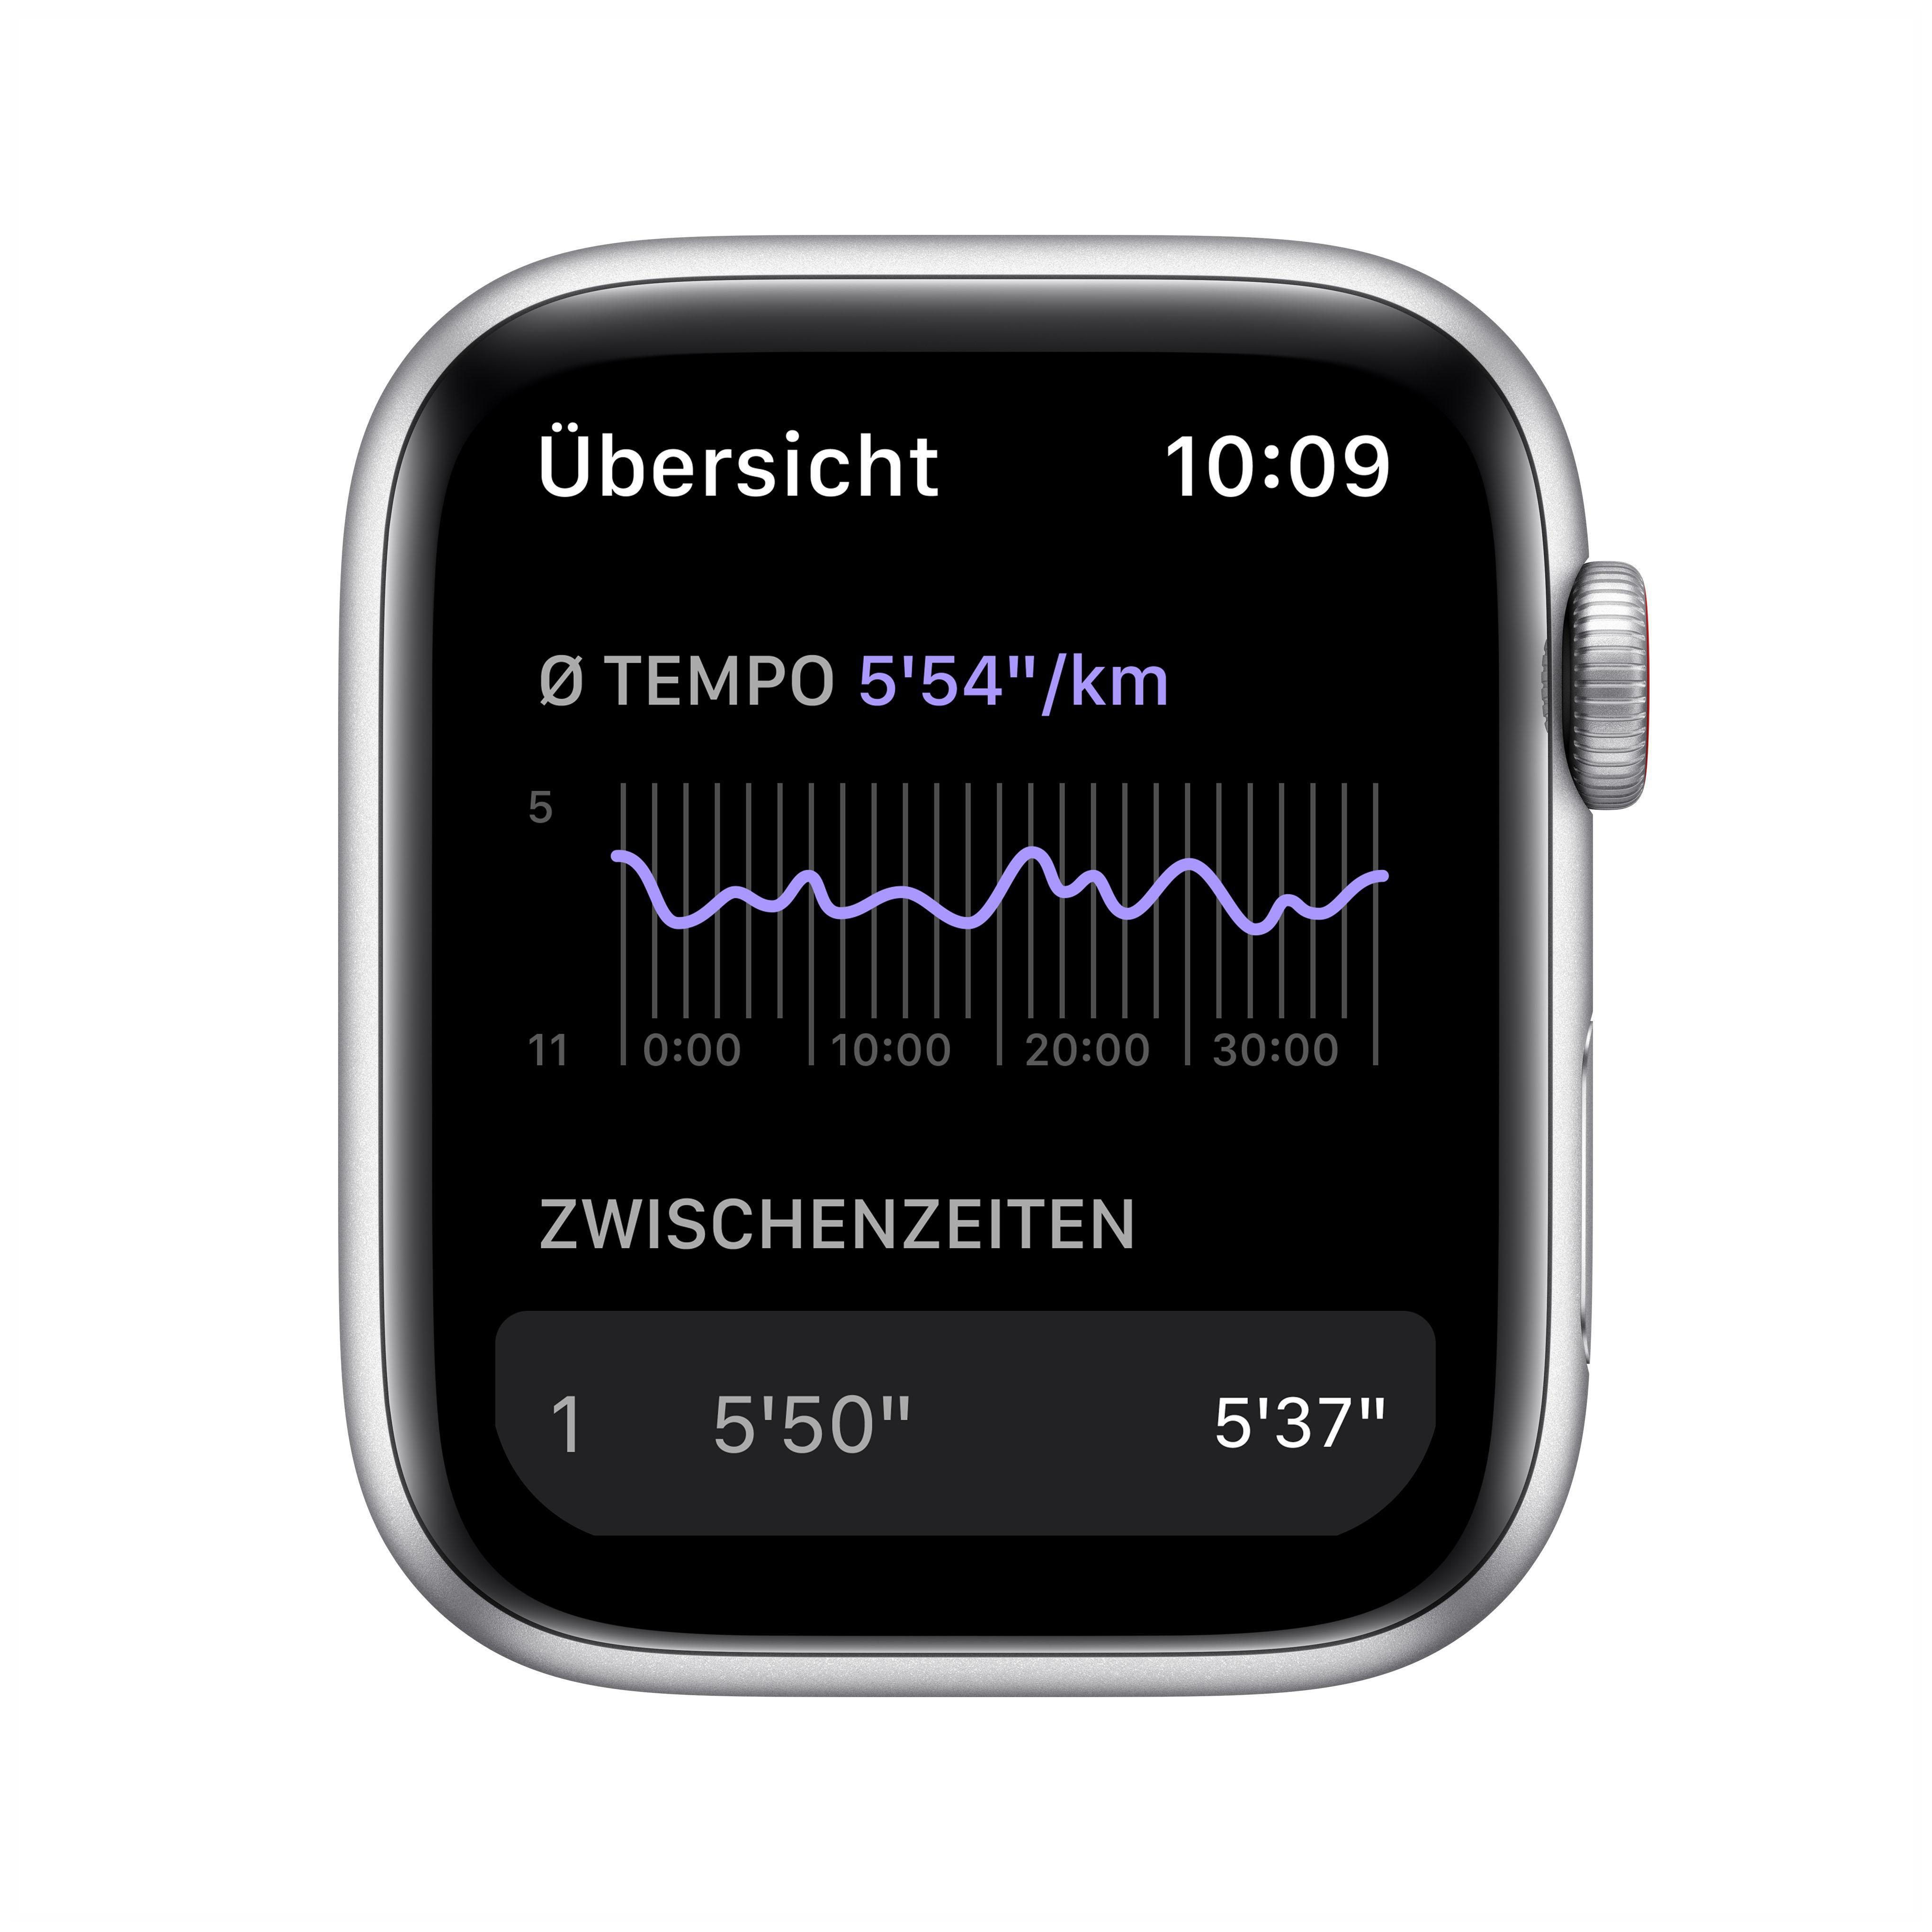 SE 140 Cellular) Smartwatch 44mm (GPS Gehäuse: Nike Fluorelastomer, - Armband: Silber APPLE mm, + Platinum/Schwarz, Pure Watch 220